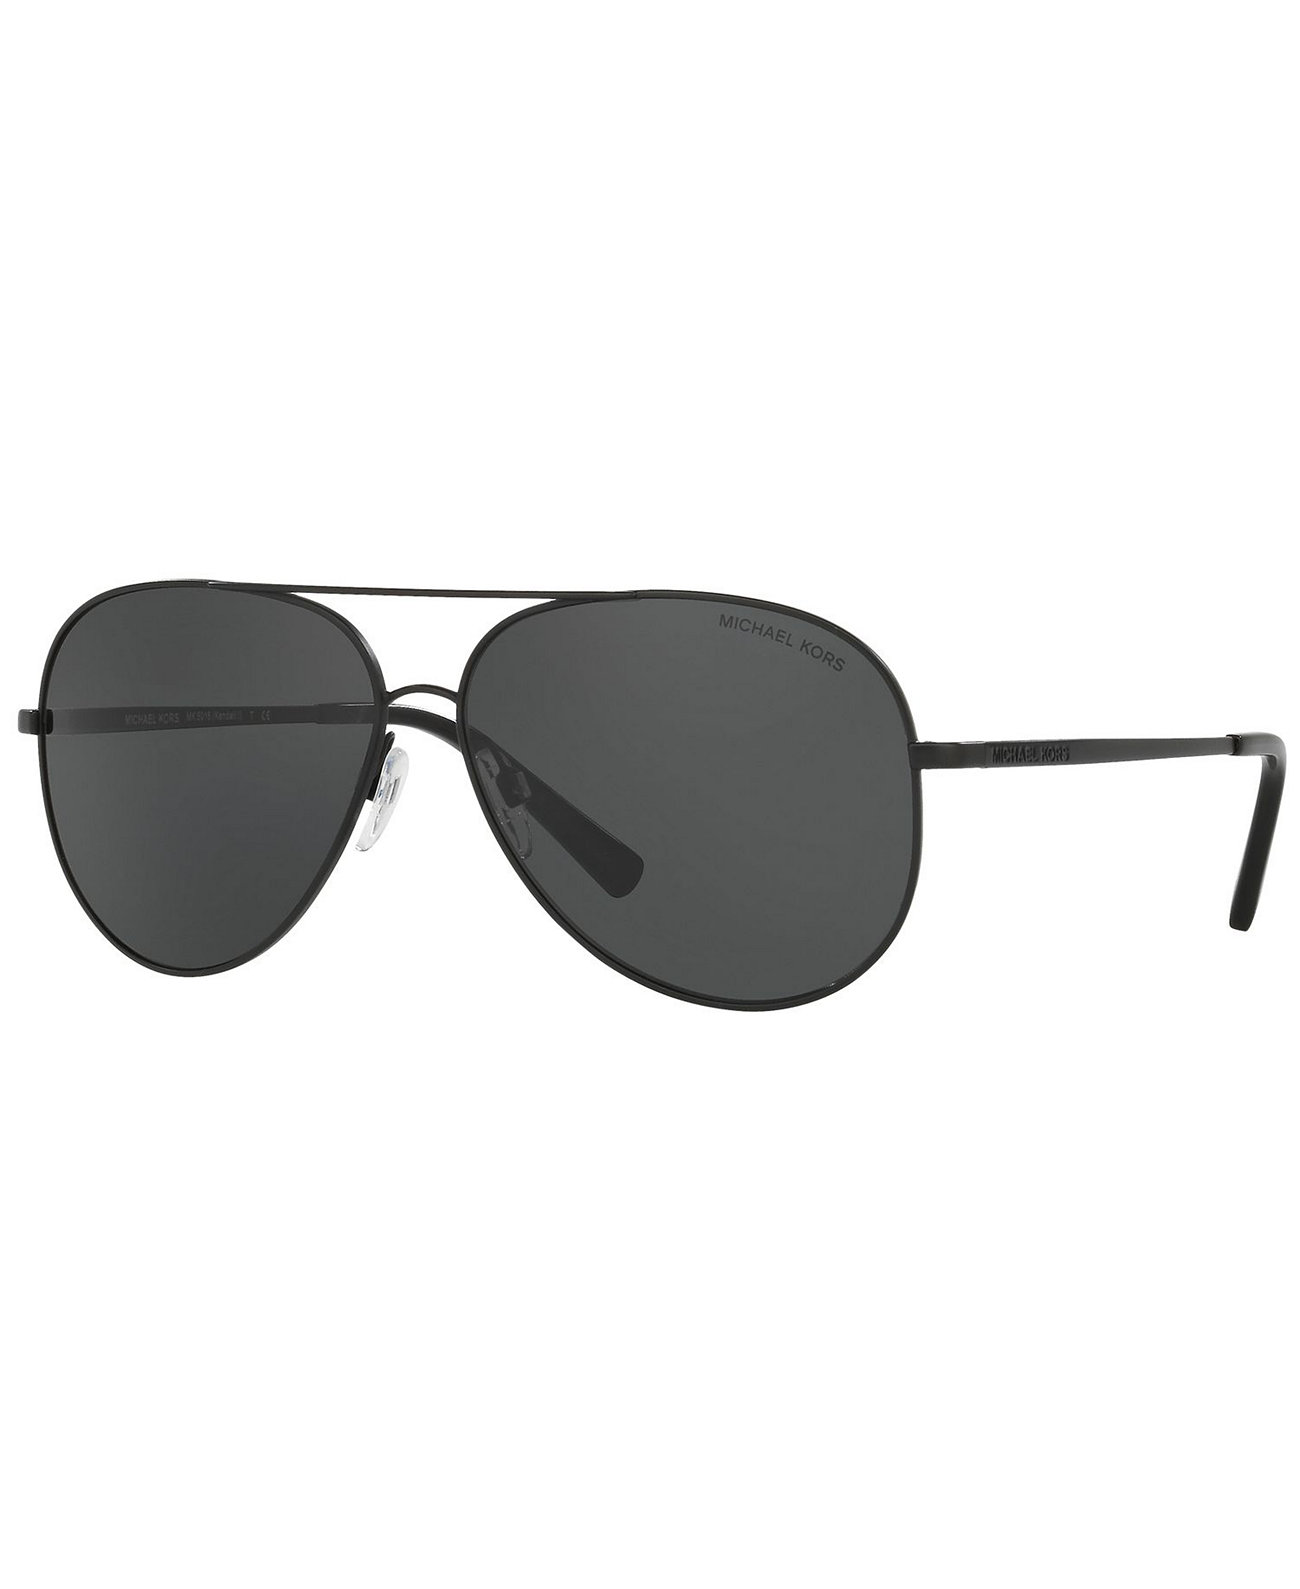 Солнцезащитные очки, MK5016 60 KENDALL I Michael Kors